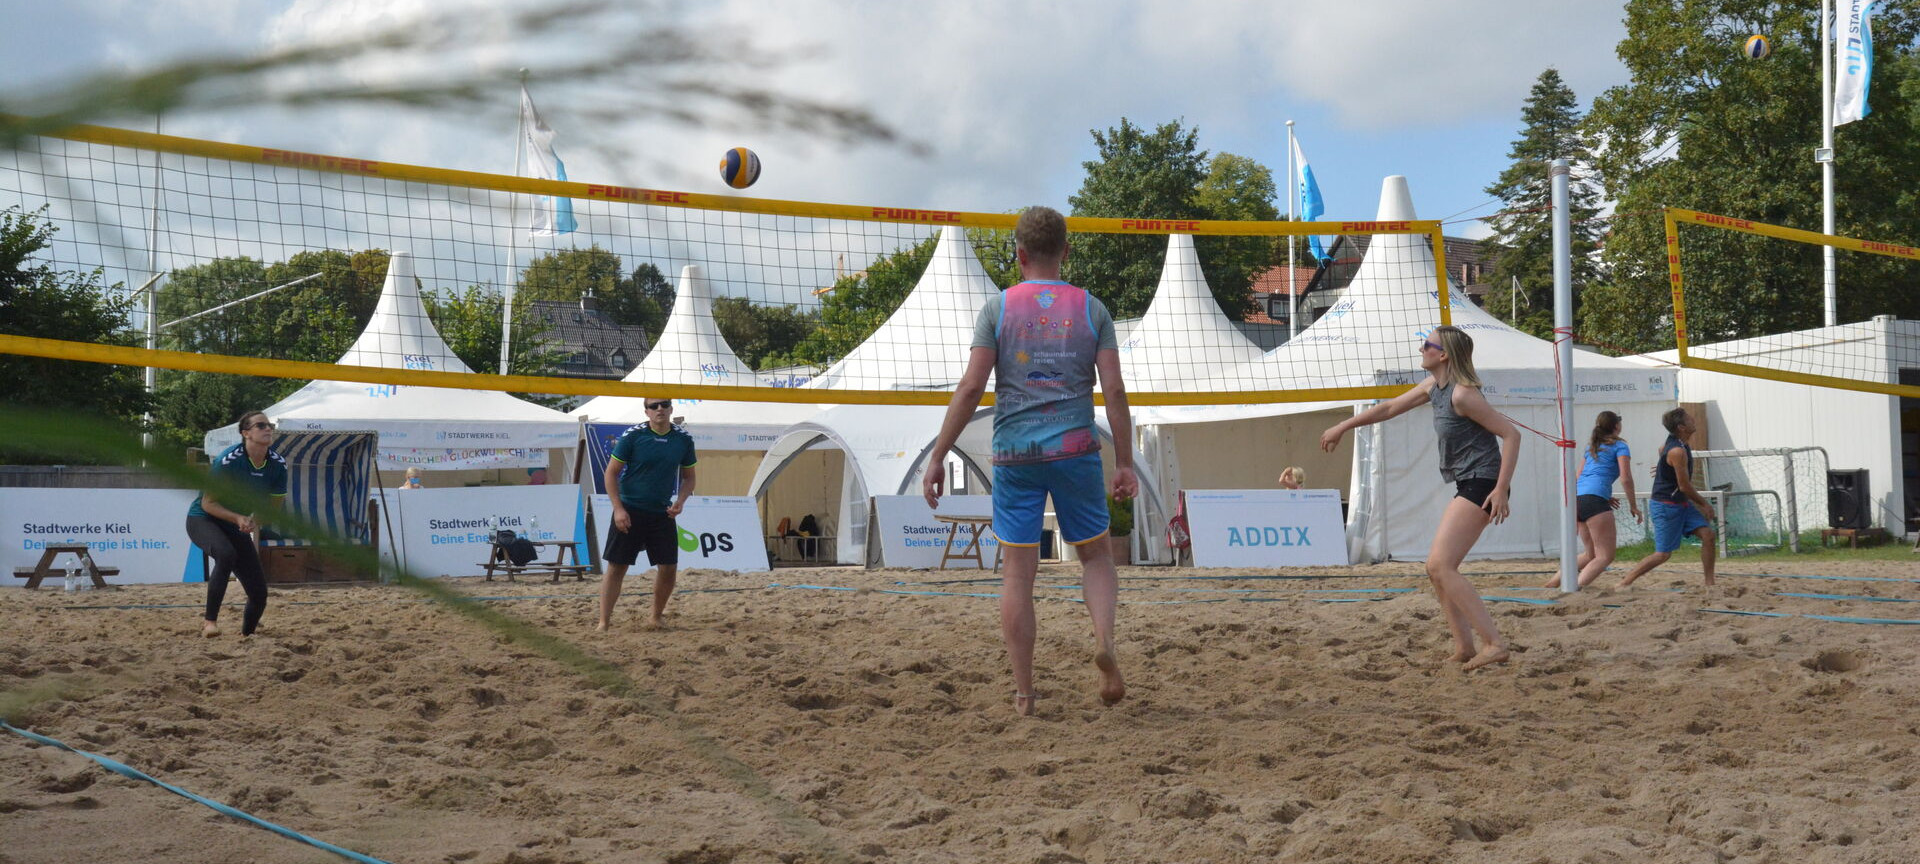 Zwei Teams spielen Beachvolleyball im Segelcamp